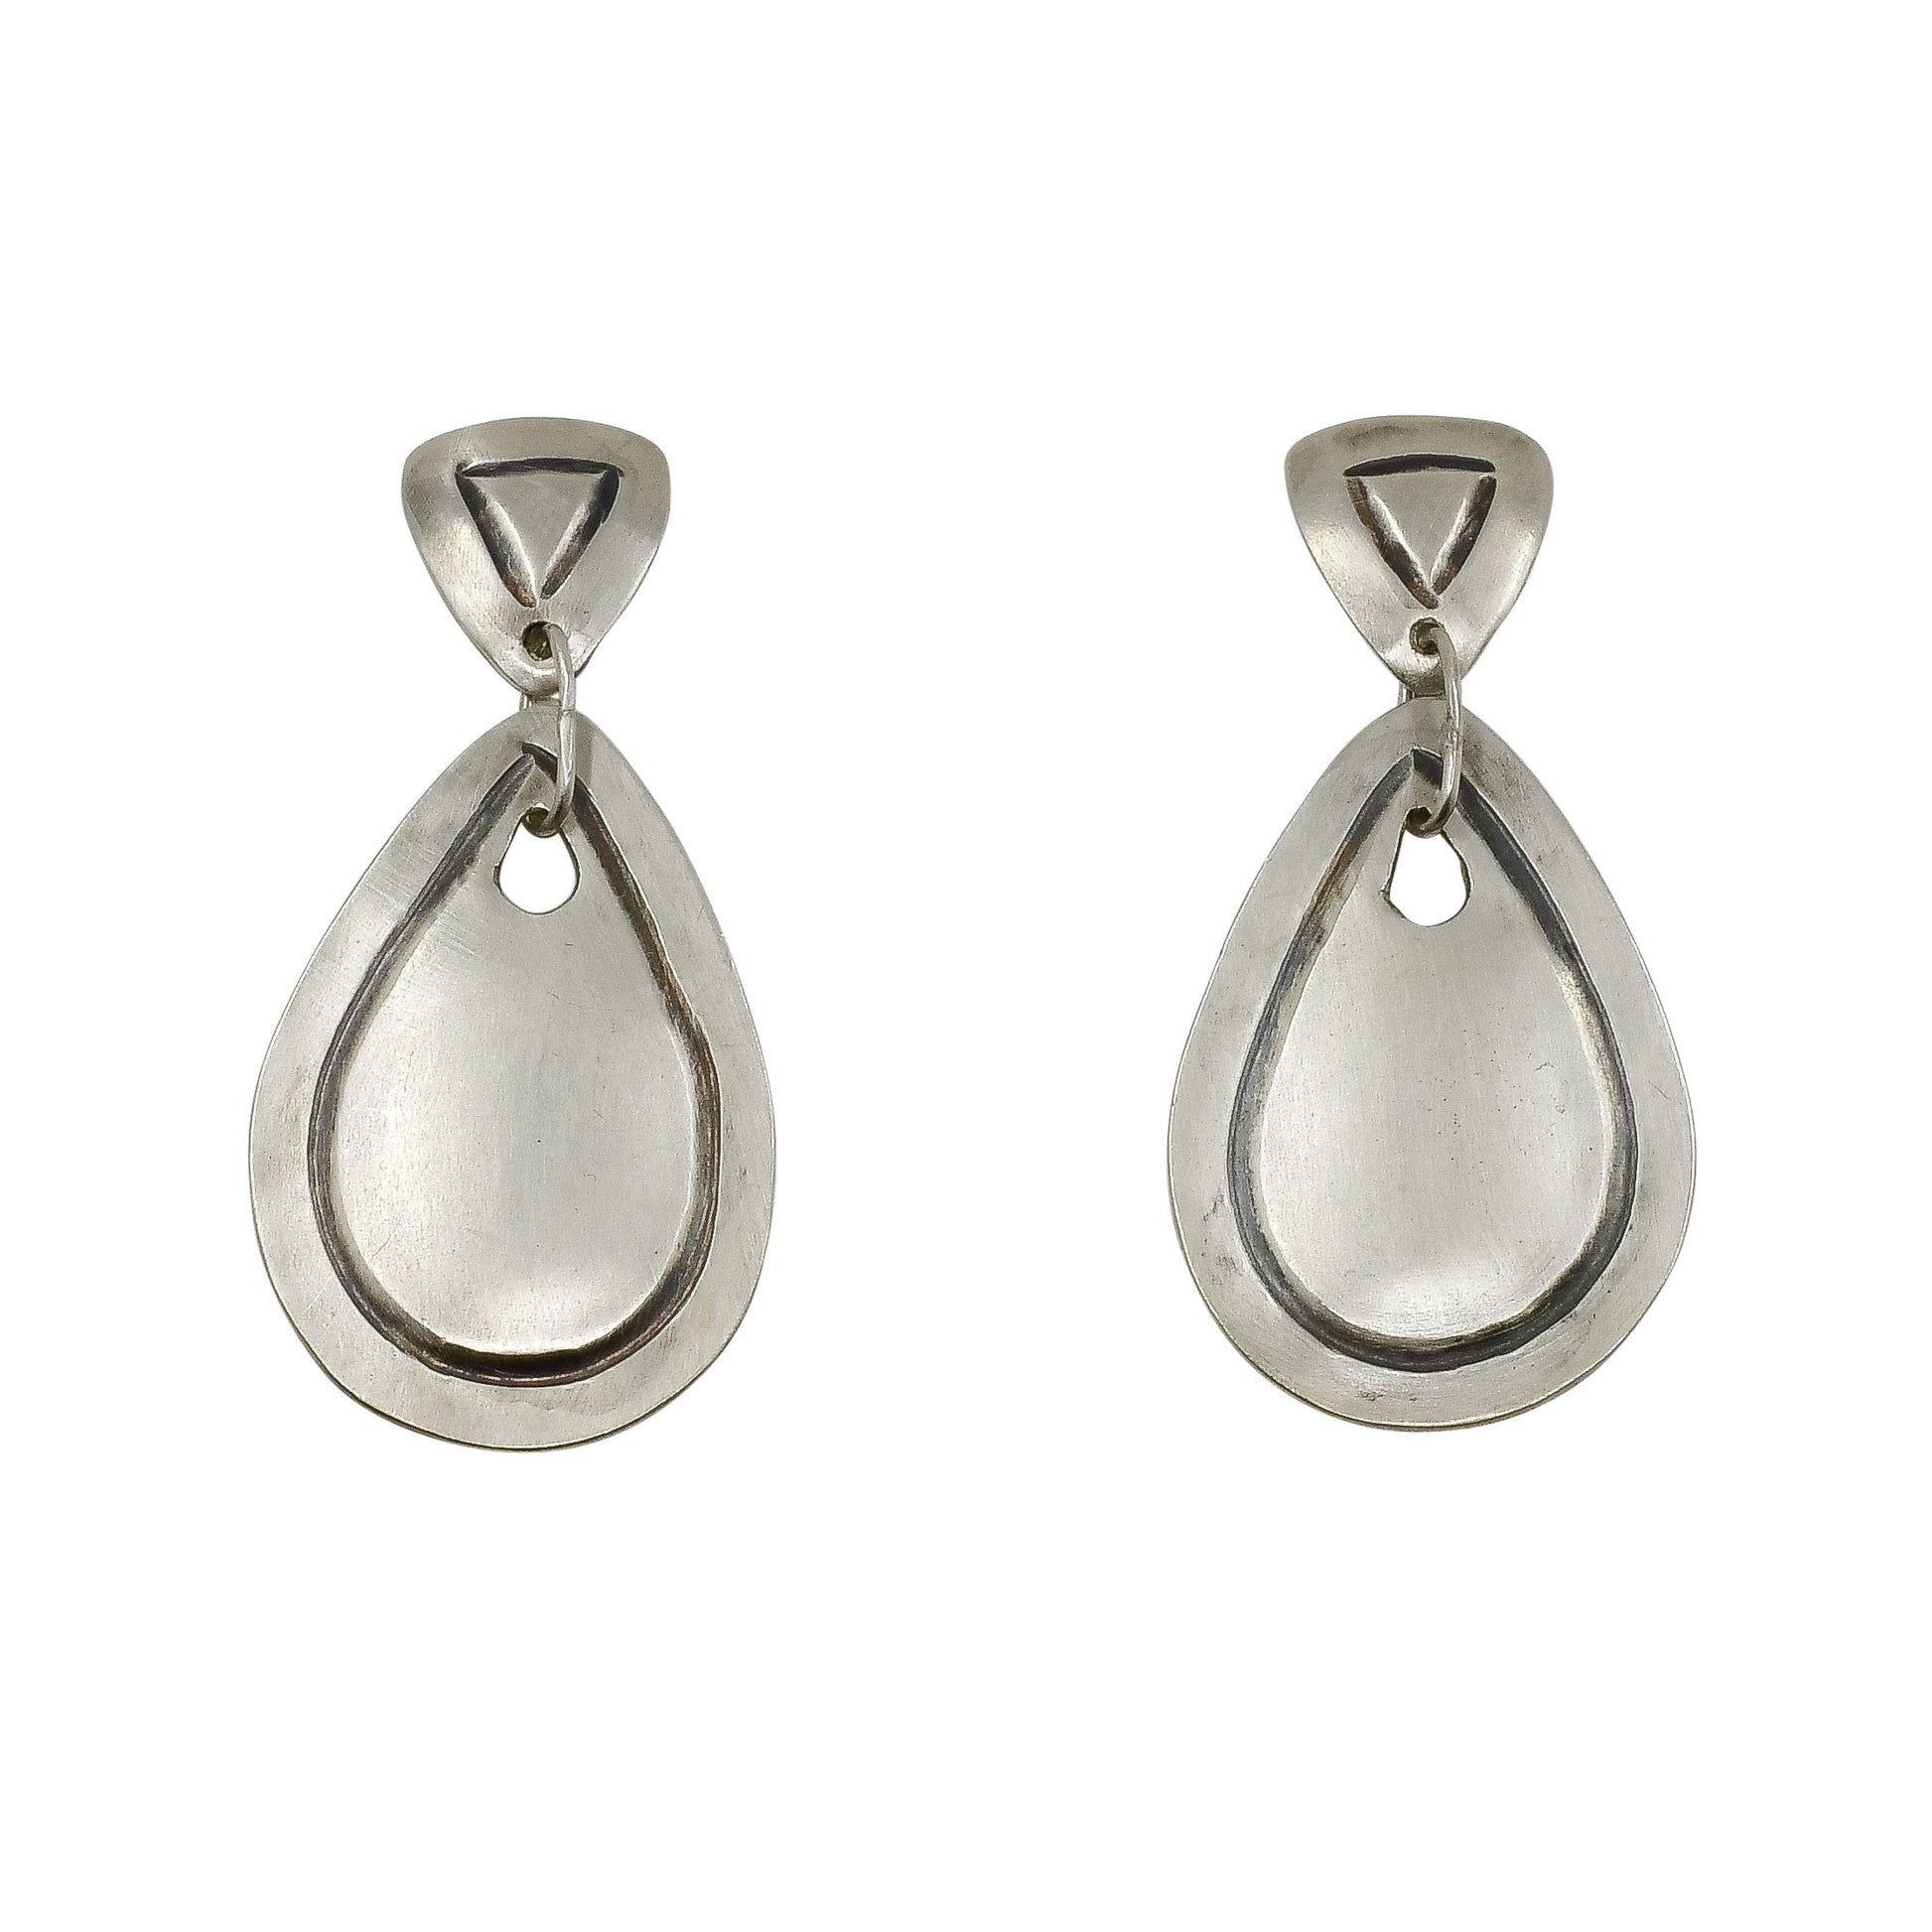 James Faks Dangle Earrings of Sterling Silver - Turquoise & Tufa